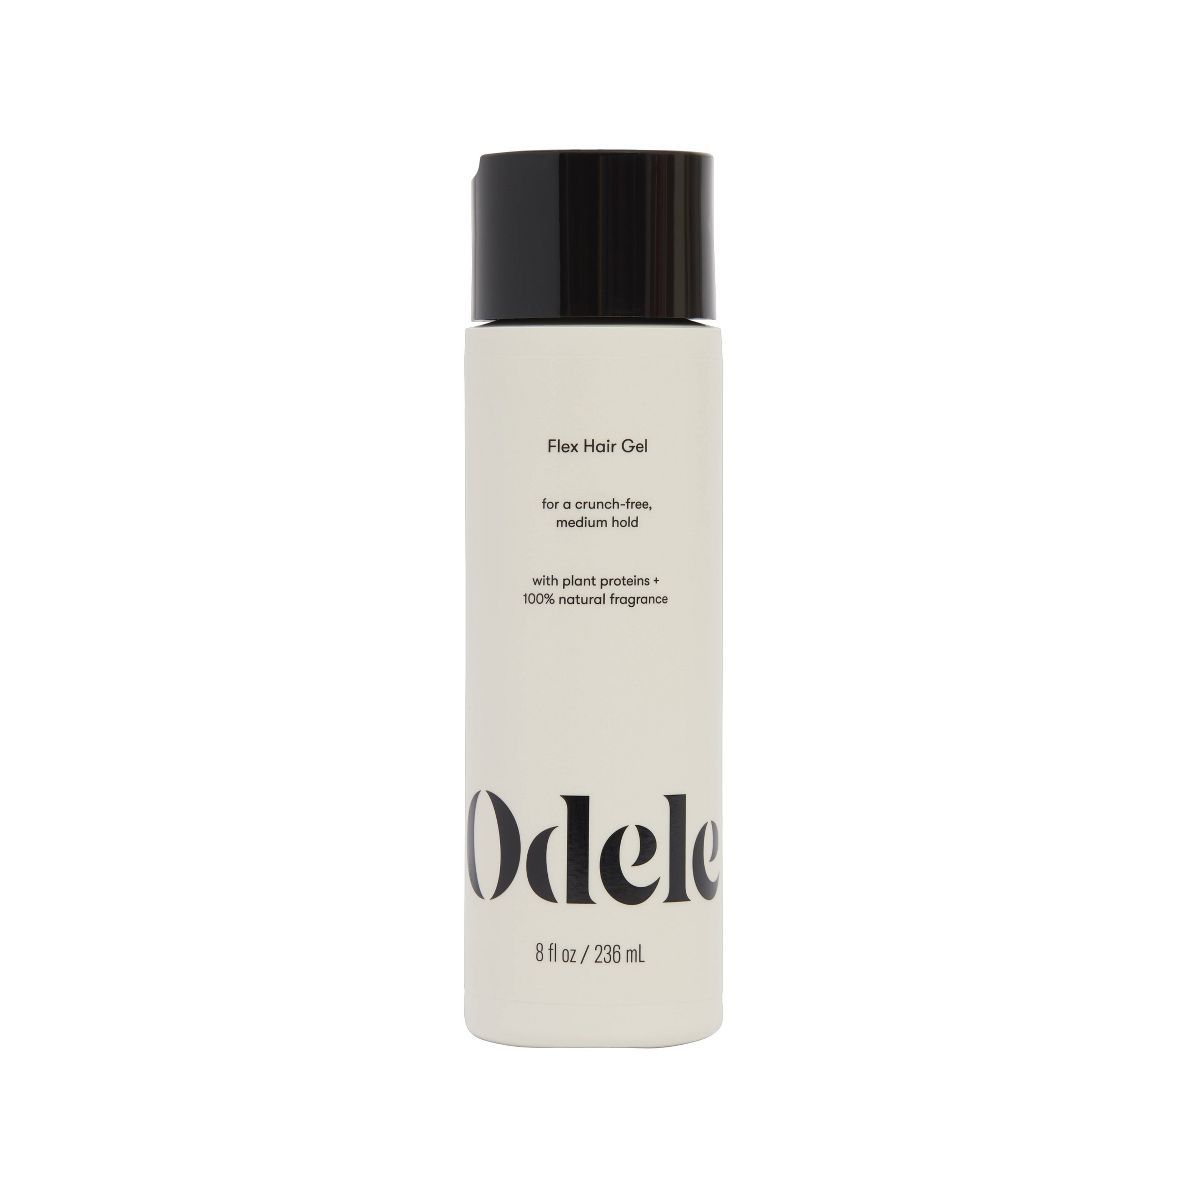 Odele Styling Gel Hair Treatment - 8 fl oz | Target